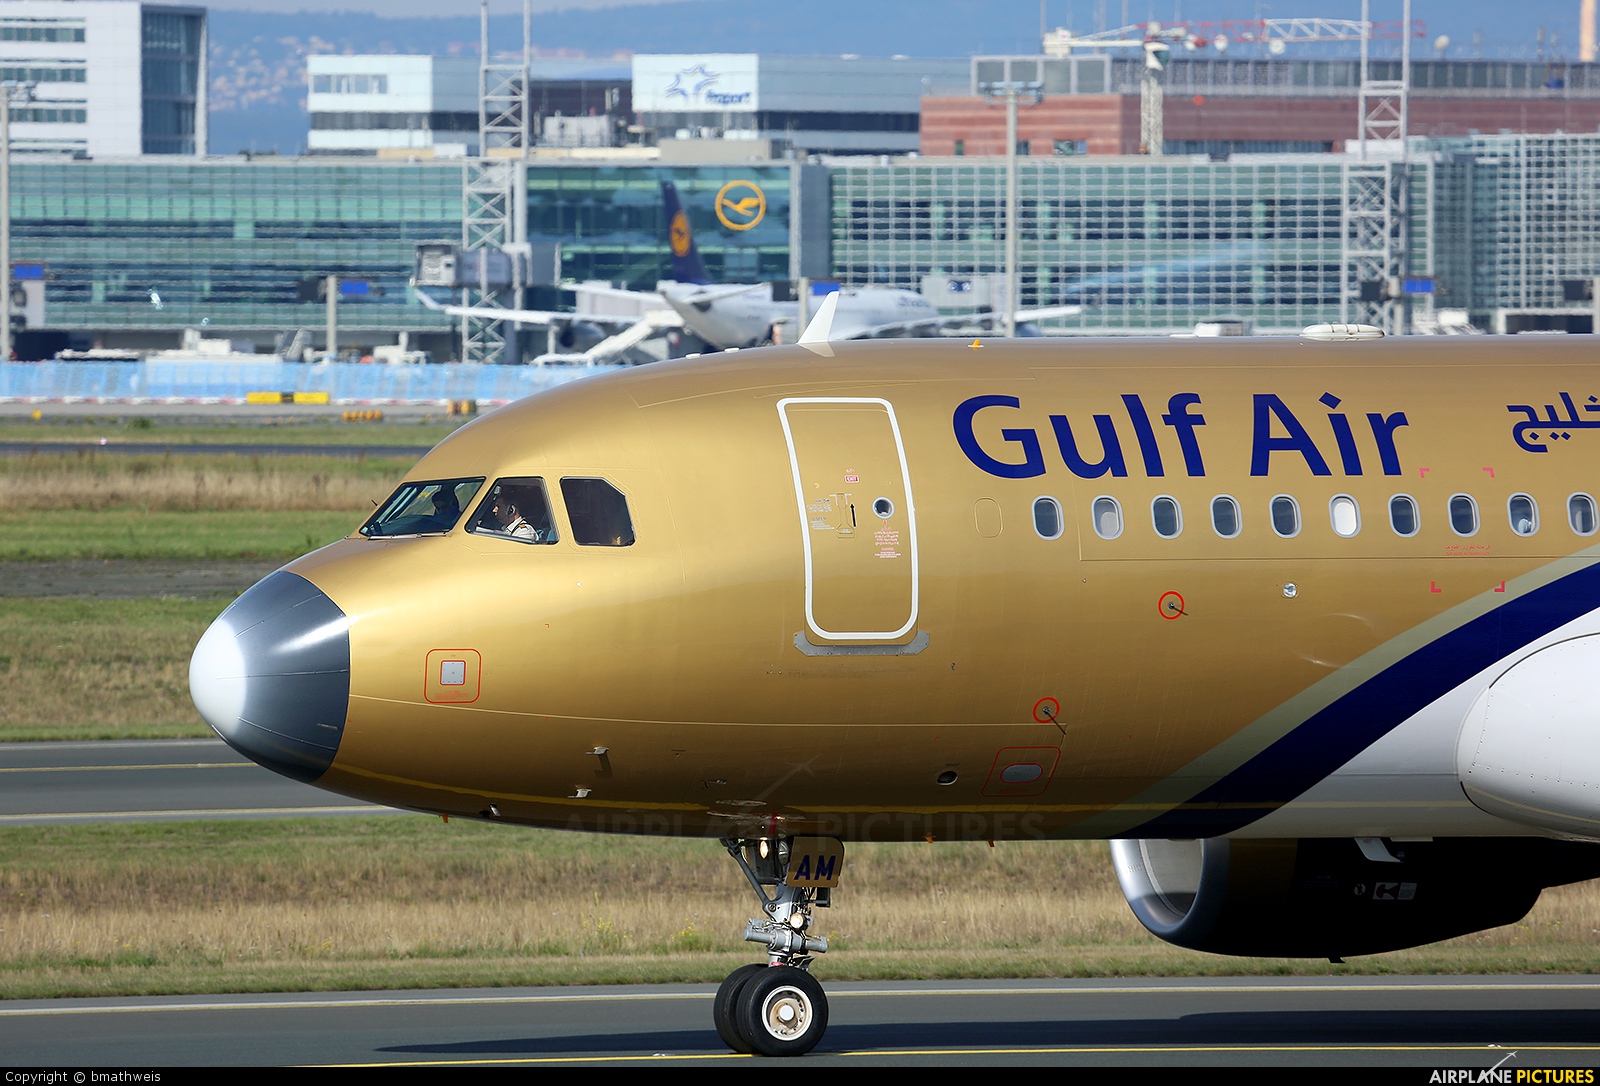 Gulf Air A9C-AM aircraft at Frankfurt